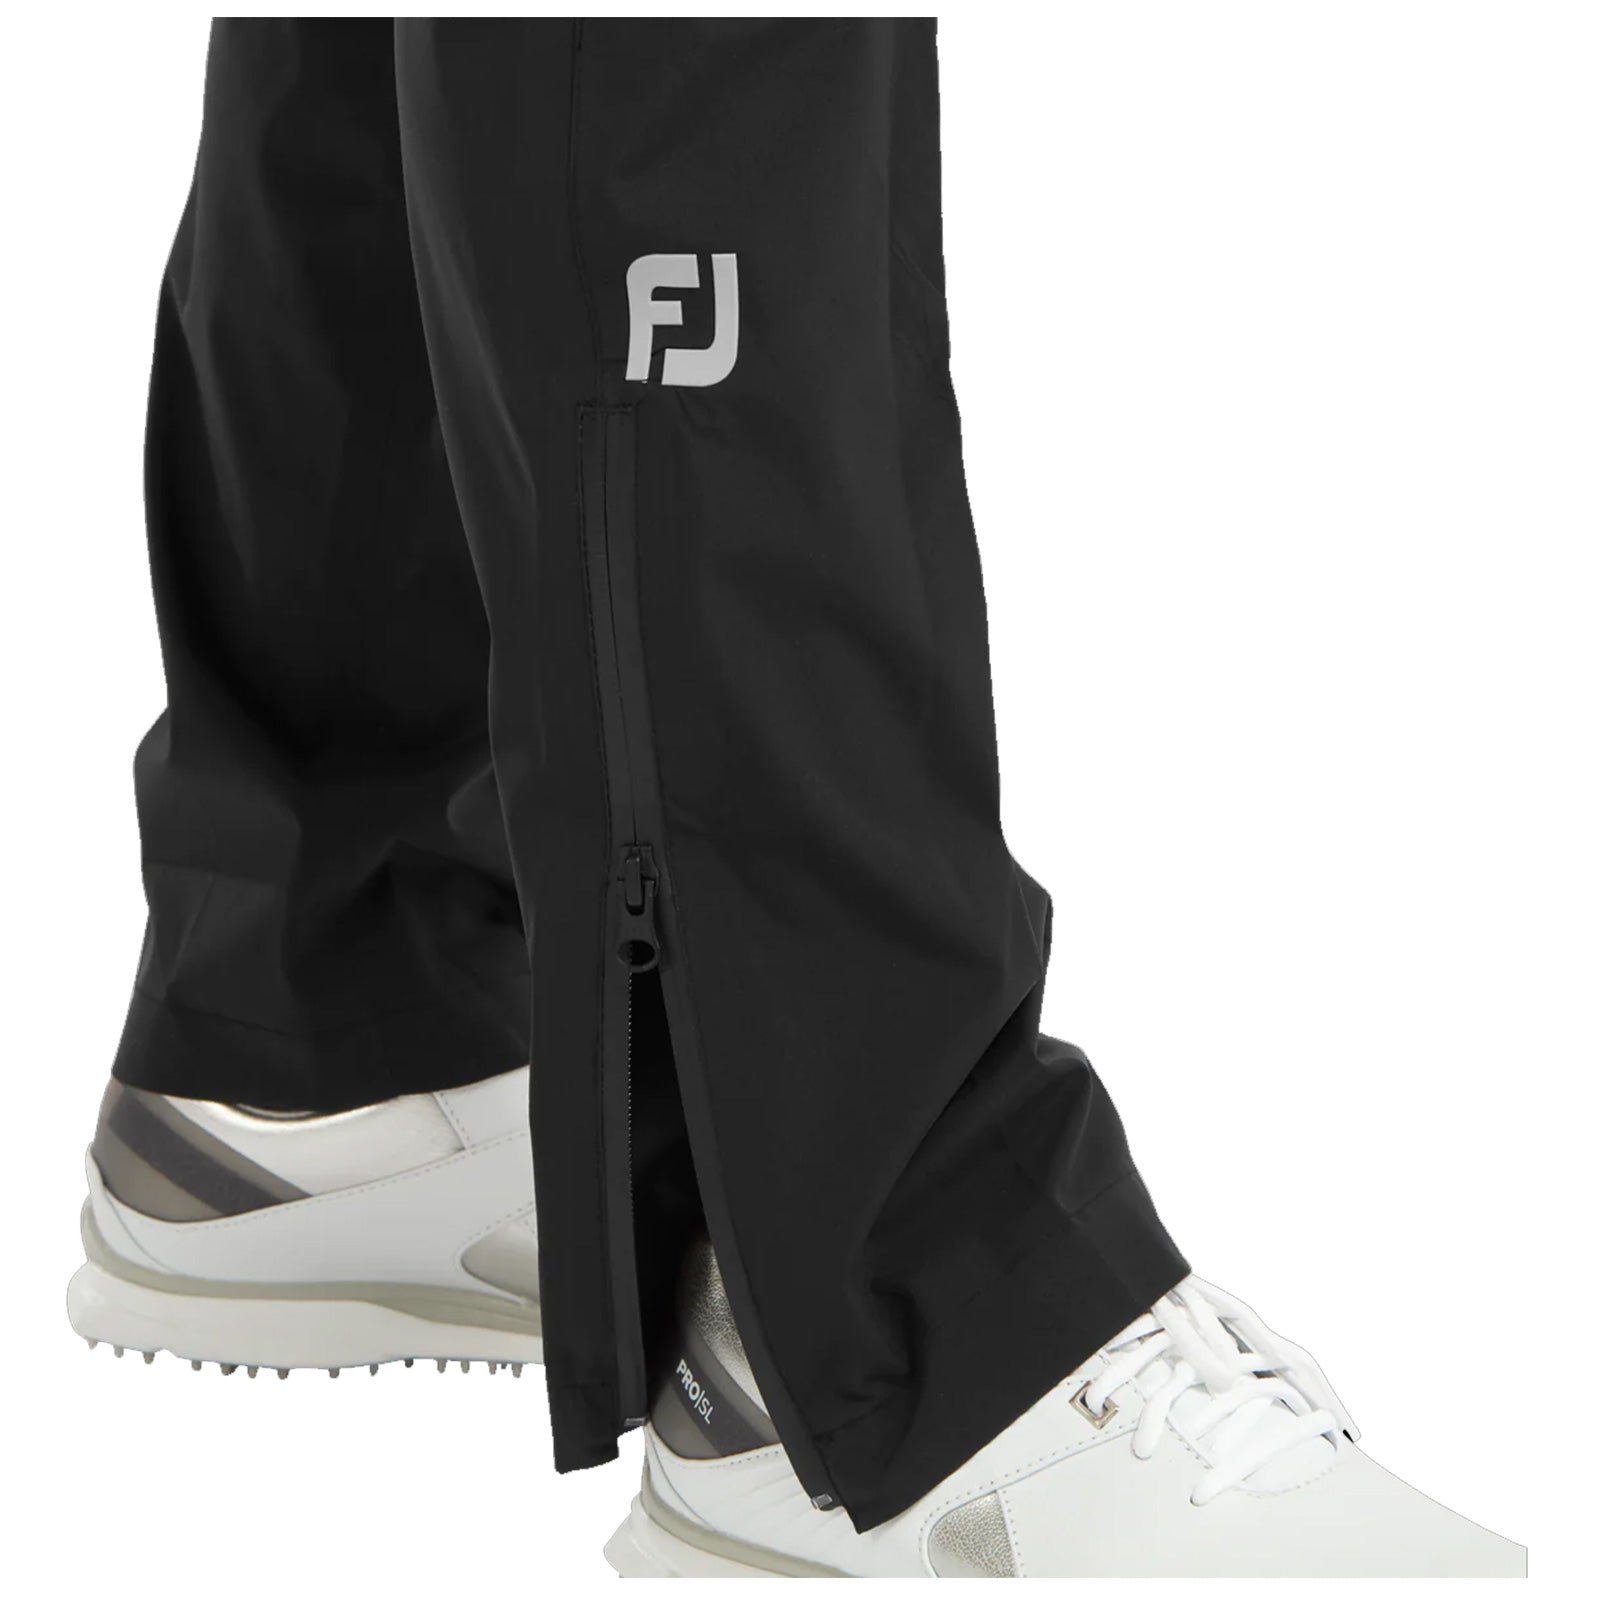 FootJoy Sueded Cotton Twill 5-Pocket Pants - Golfballs.com